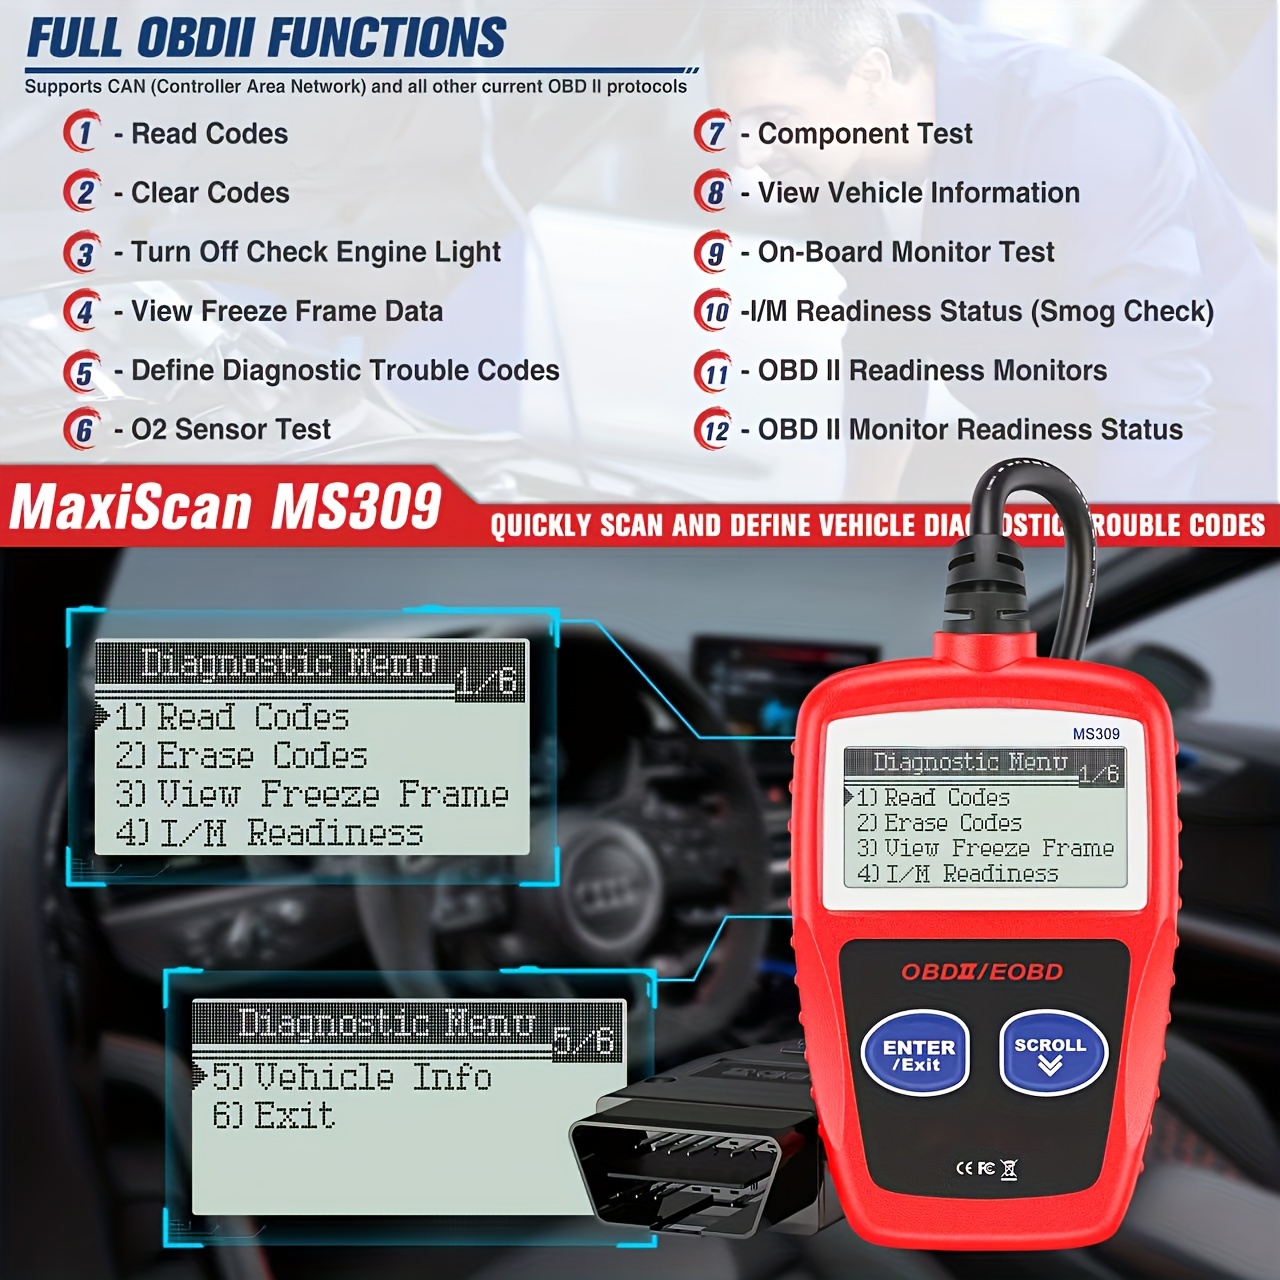 cars diagnostic tool the upgraded version of ms309 obd2 obdii eobd fault code reader scanner tool